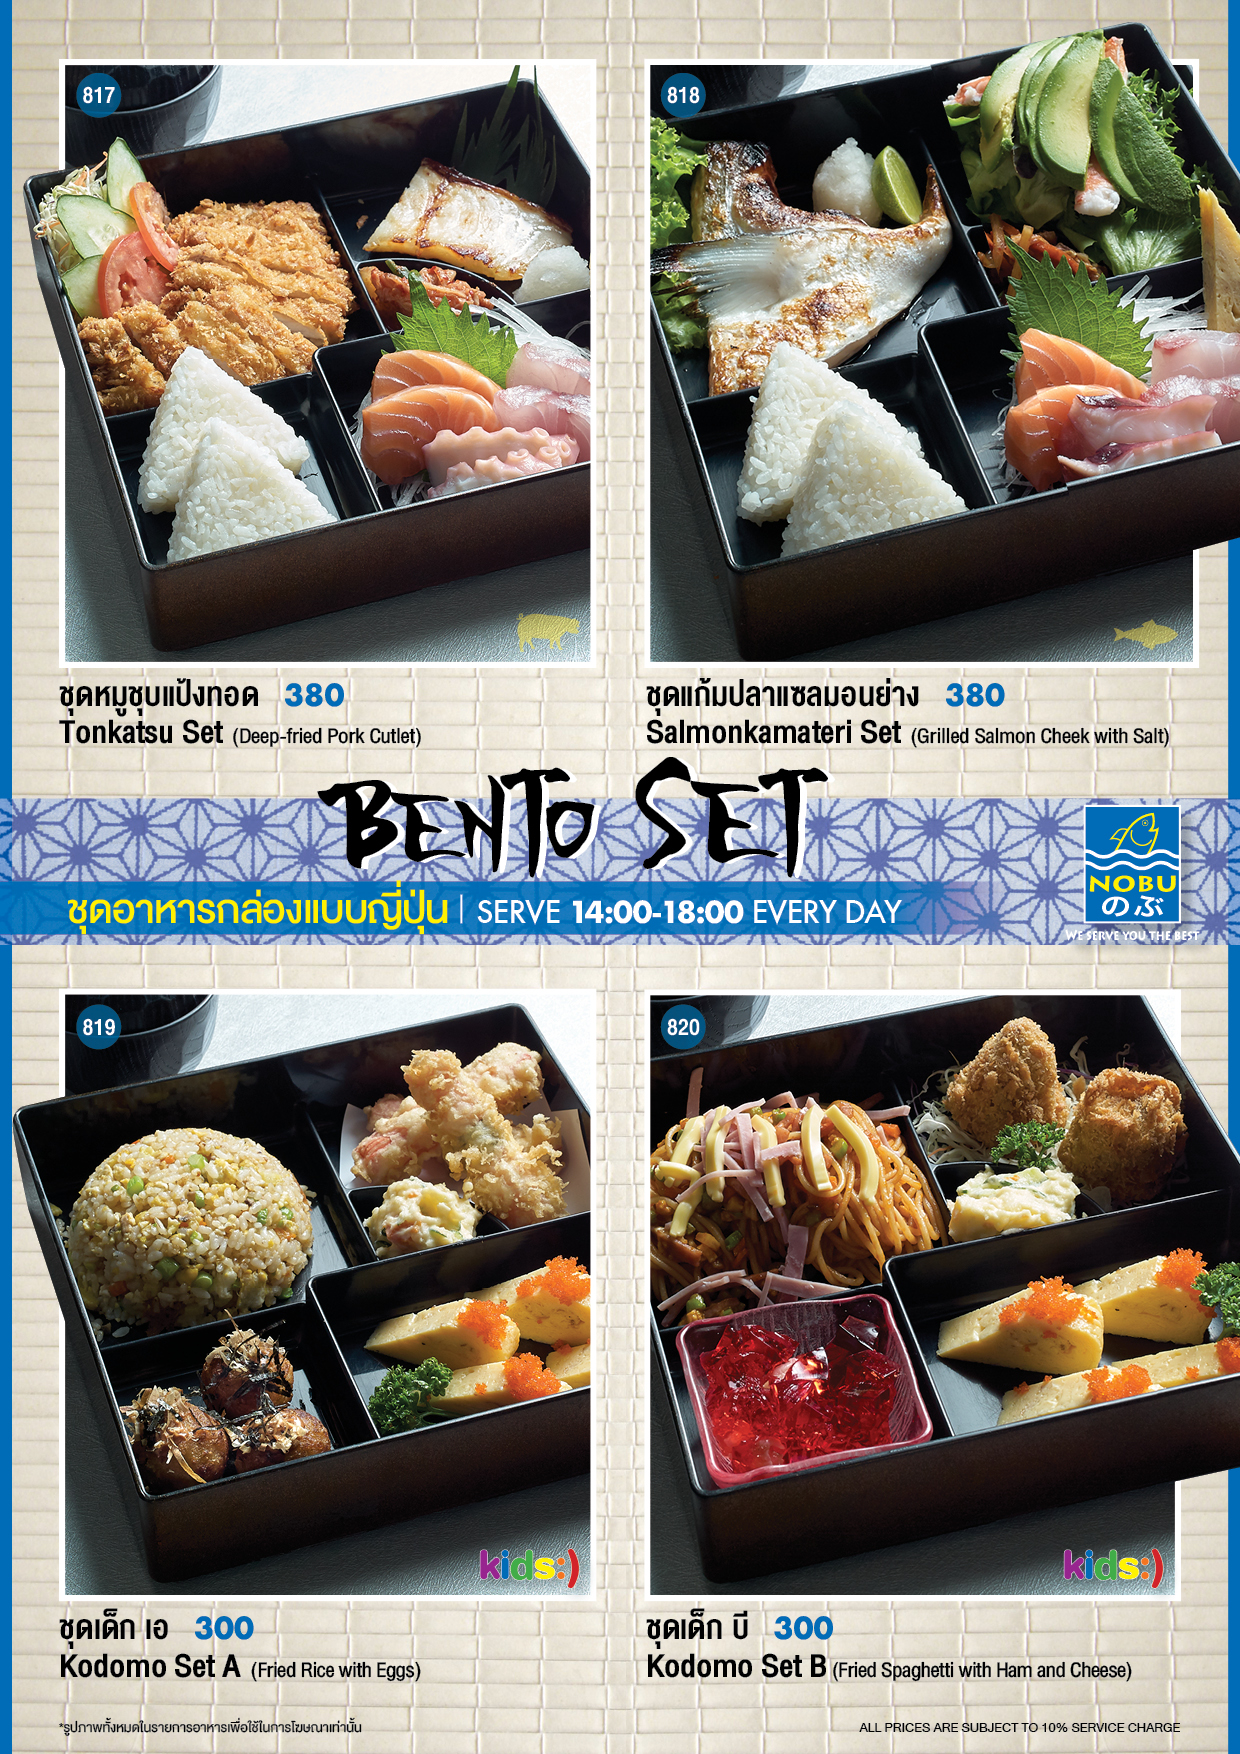 Nobu Japanese Restaurant: Bento Sets